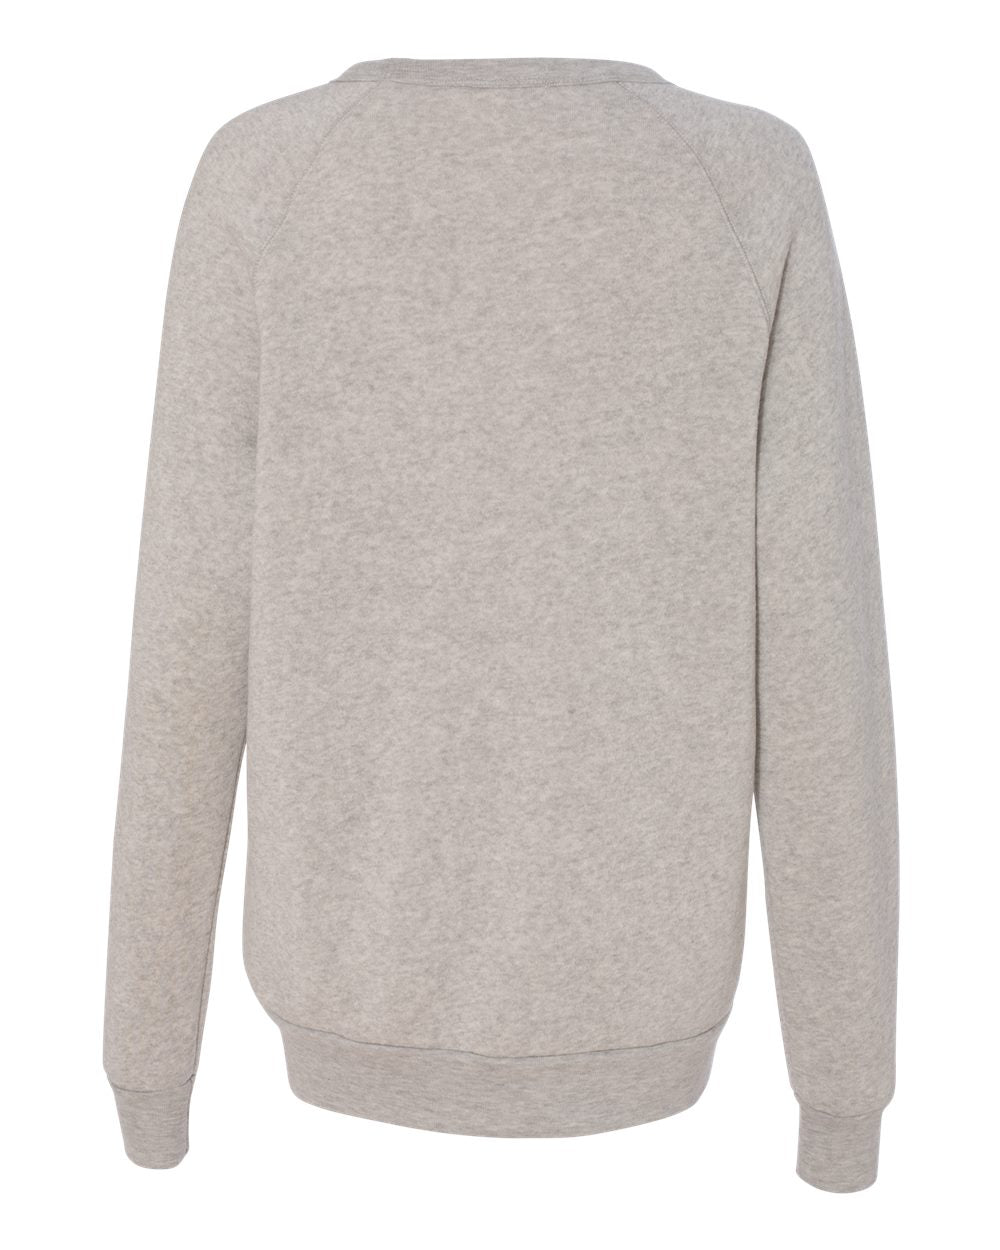 Alternative Champ Eco-Fleece Crewneck Sweatshirt 9575 #color_Eco Light Grey